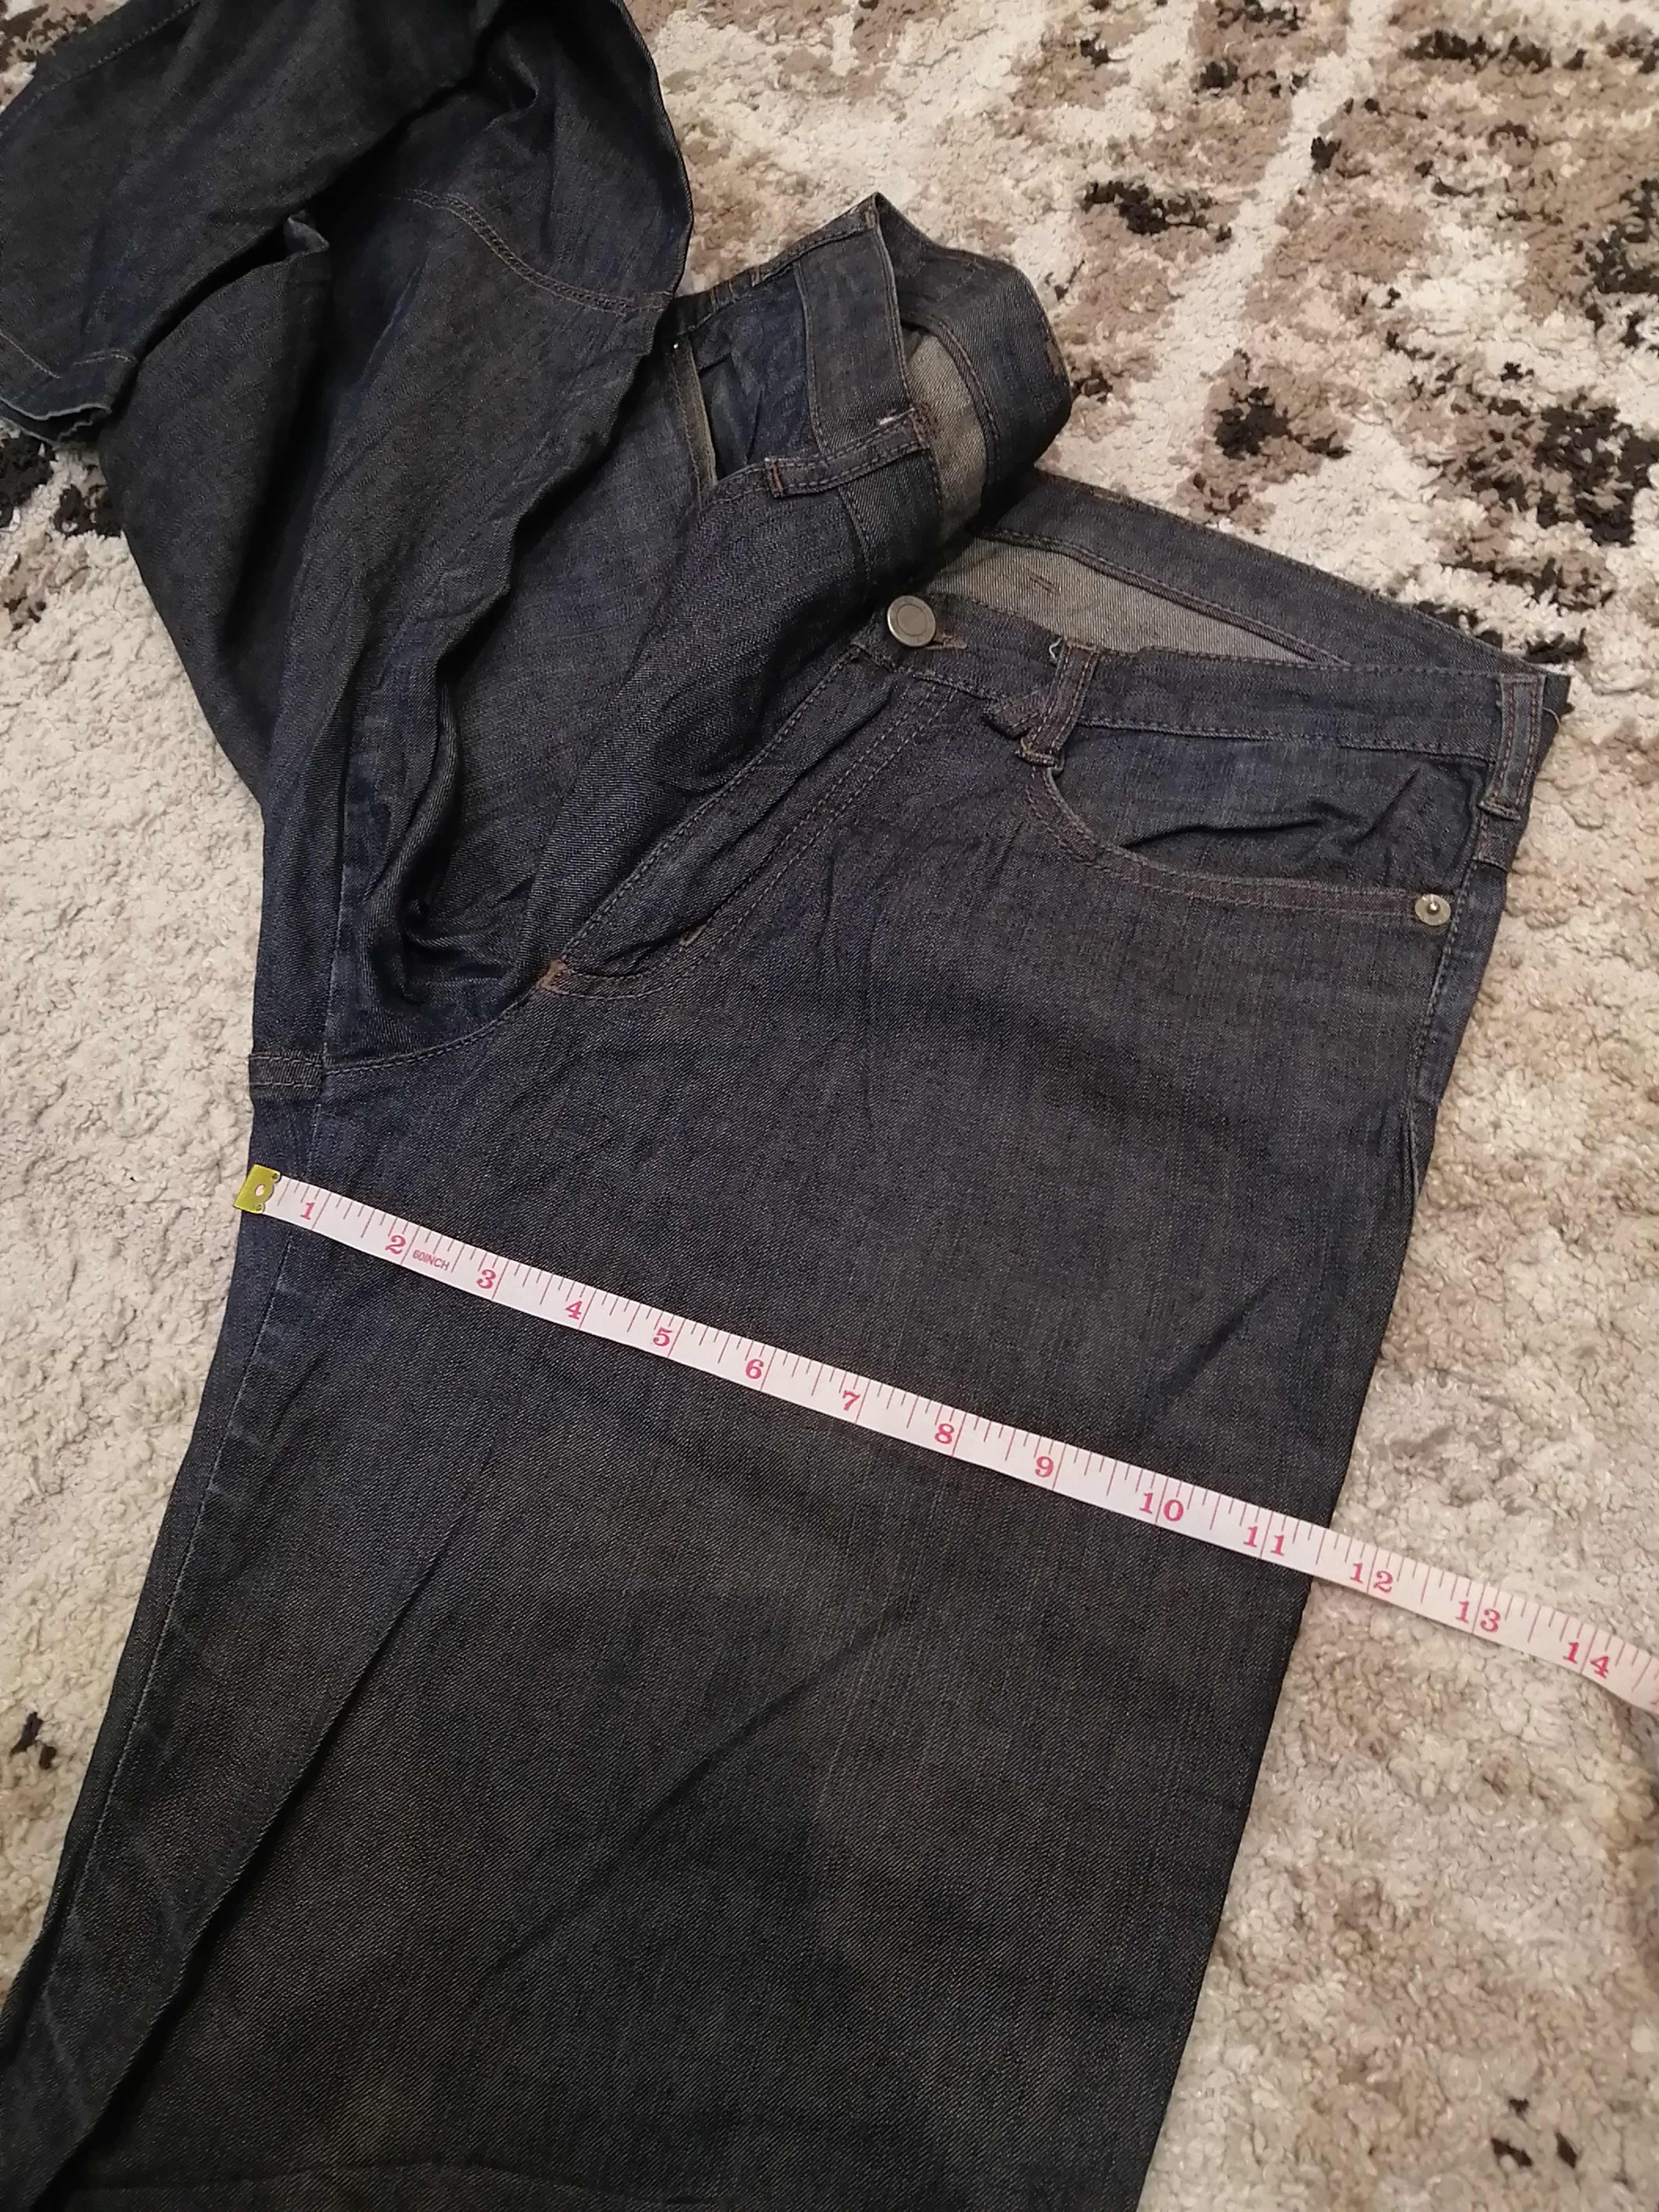 Vintage Neil Barrett Zipper Jeans - 21